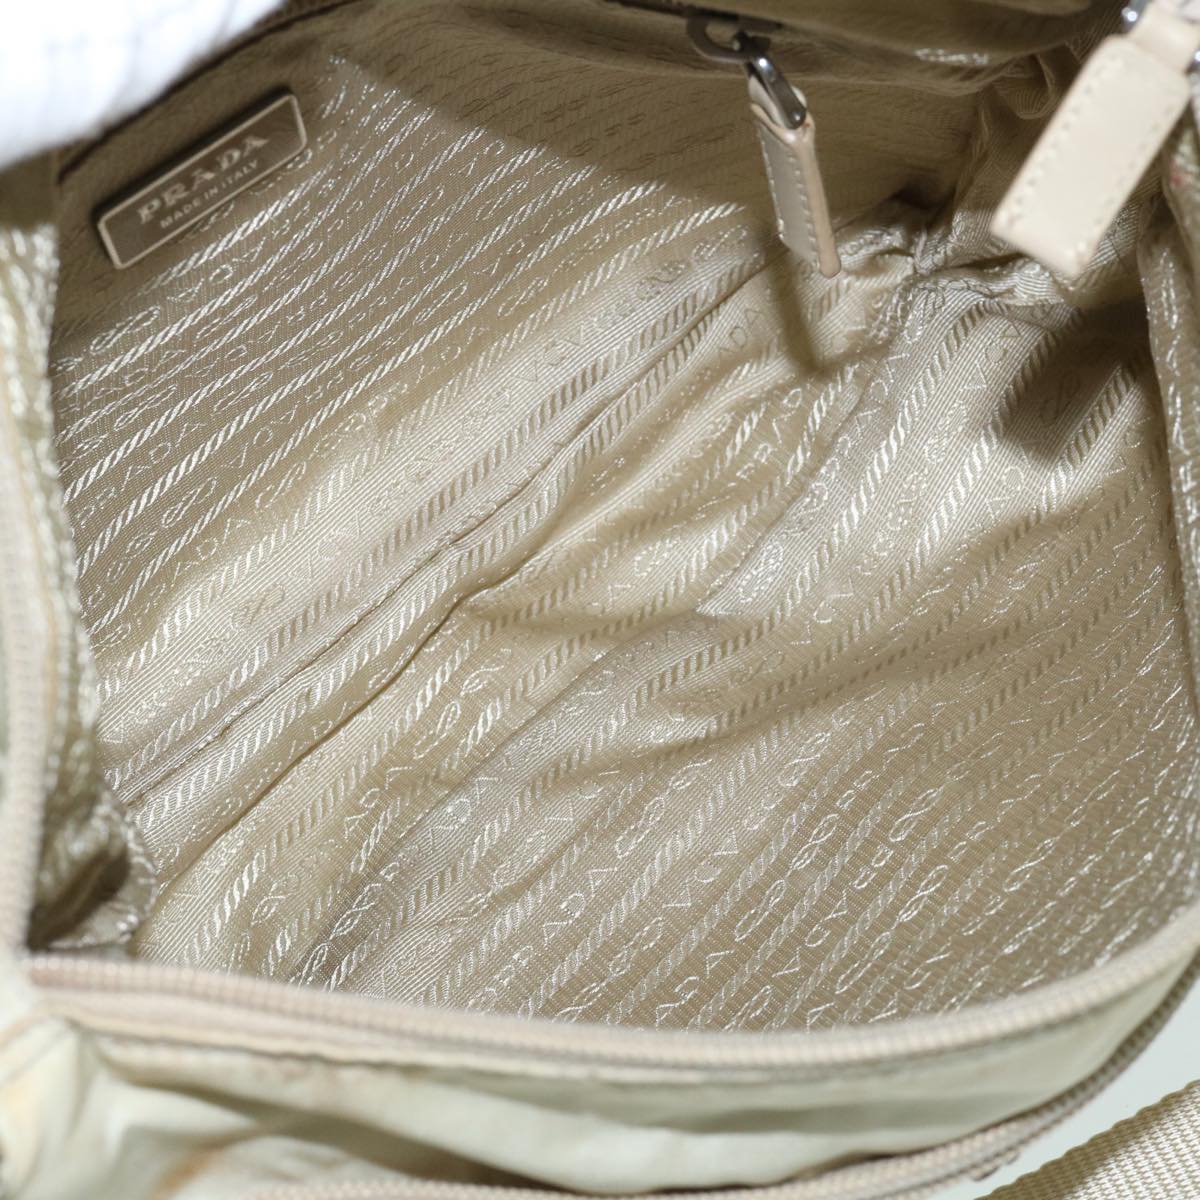 PRADA Shoulder Bag Nylon Cream Auth 62773